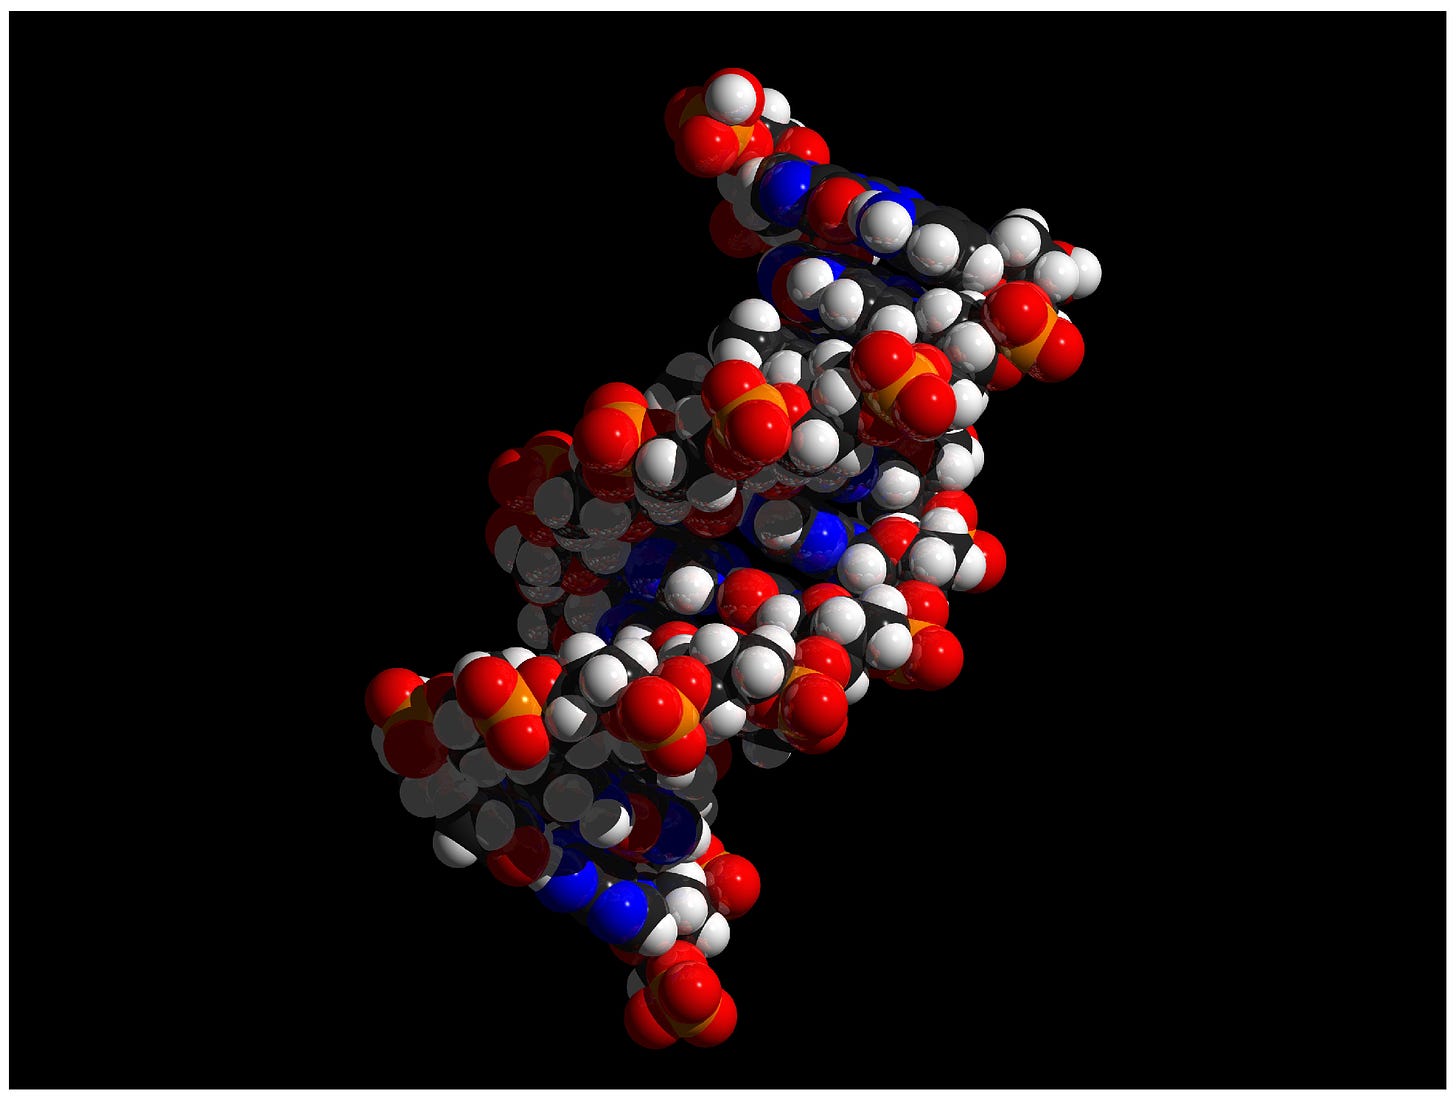 File:200 DNA Double Helix-02.jpg - Wikimedia Commons